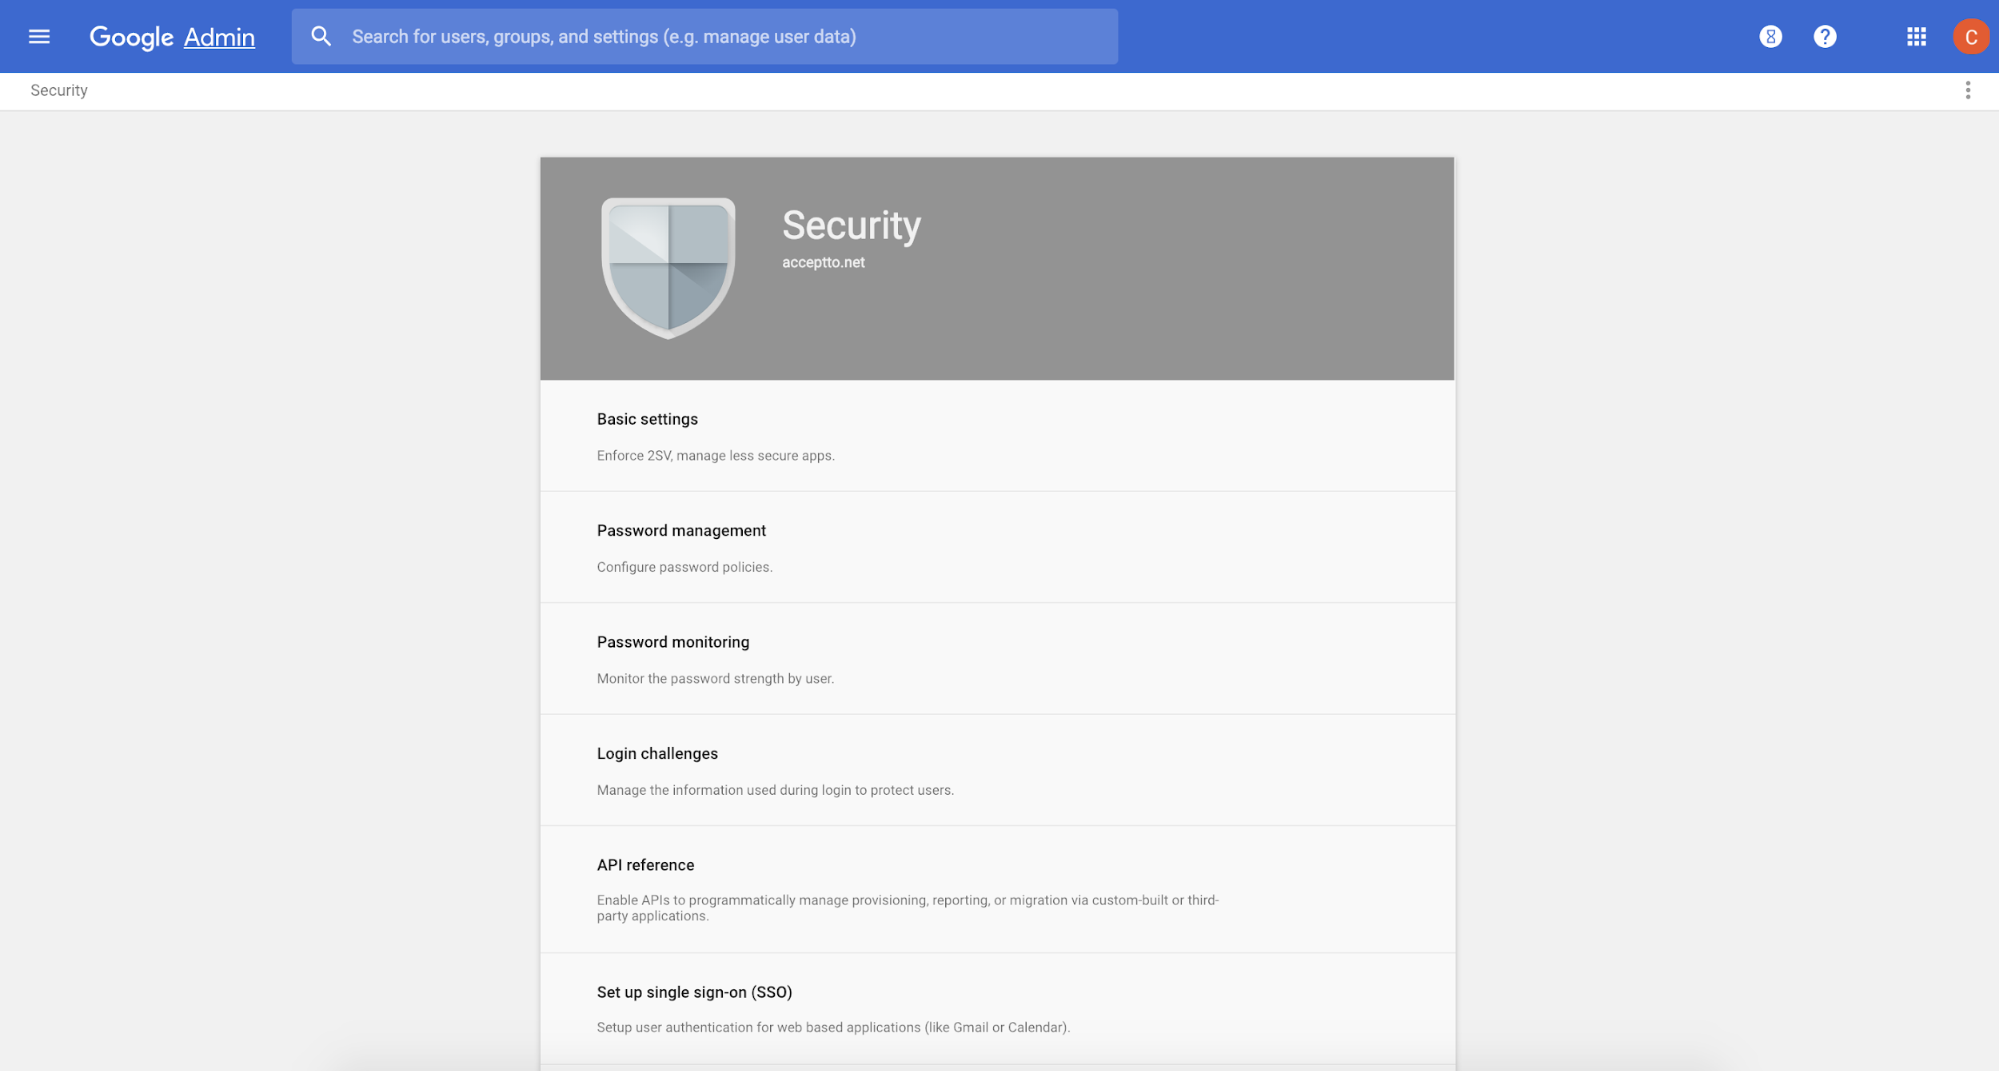 Google Admin security settings